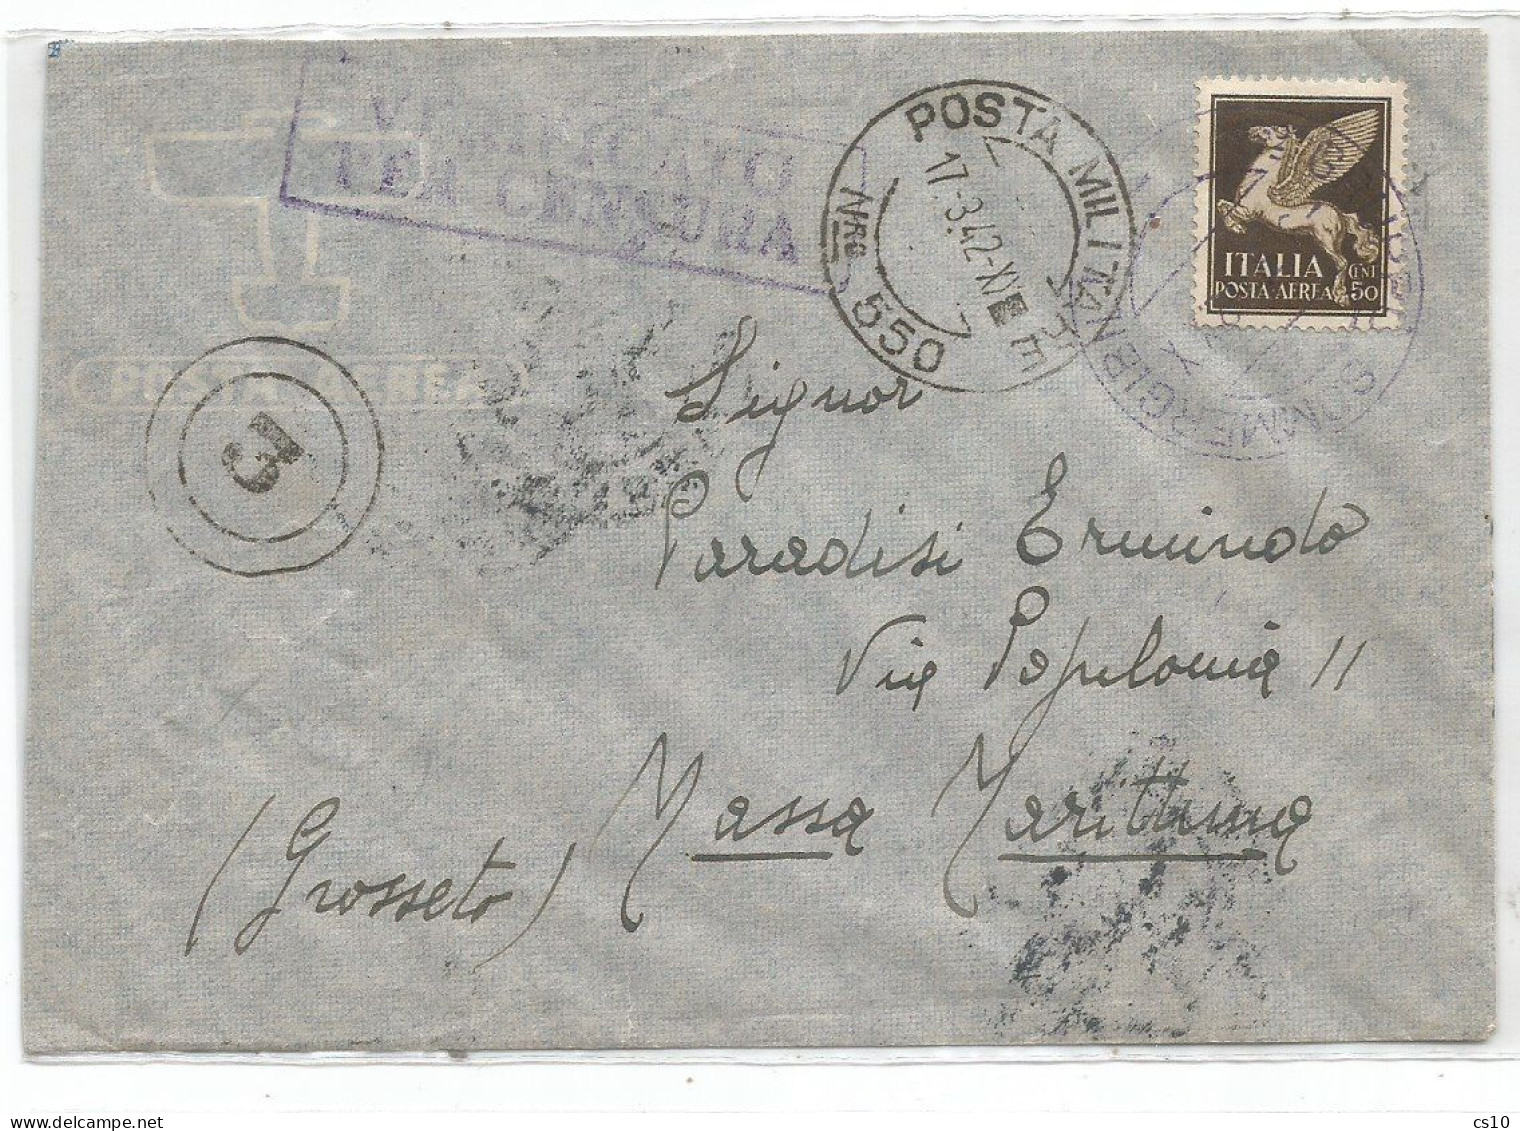 WW2 Basi Sommergibili Italiane Submarine Bases U-Boot #2 Documenti Postali Con CENSURA 1941/42 - Collections